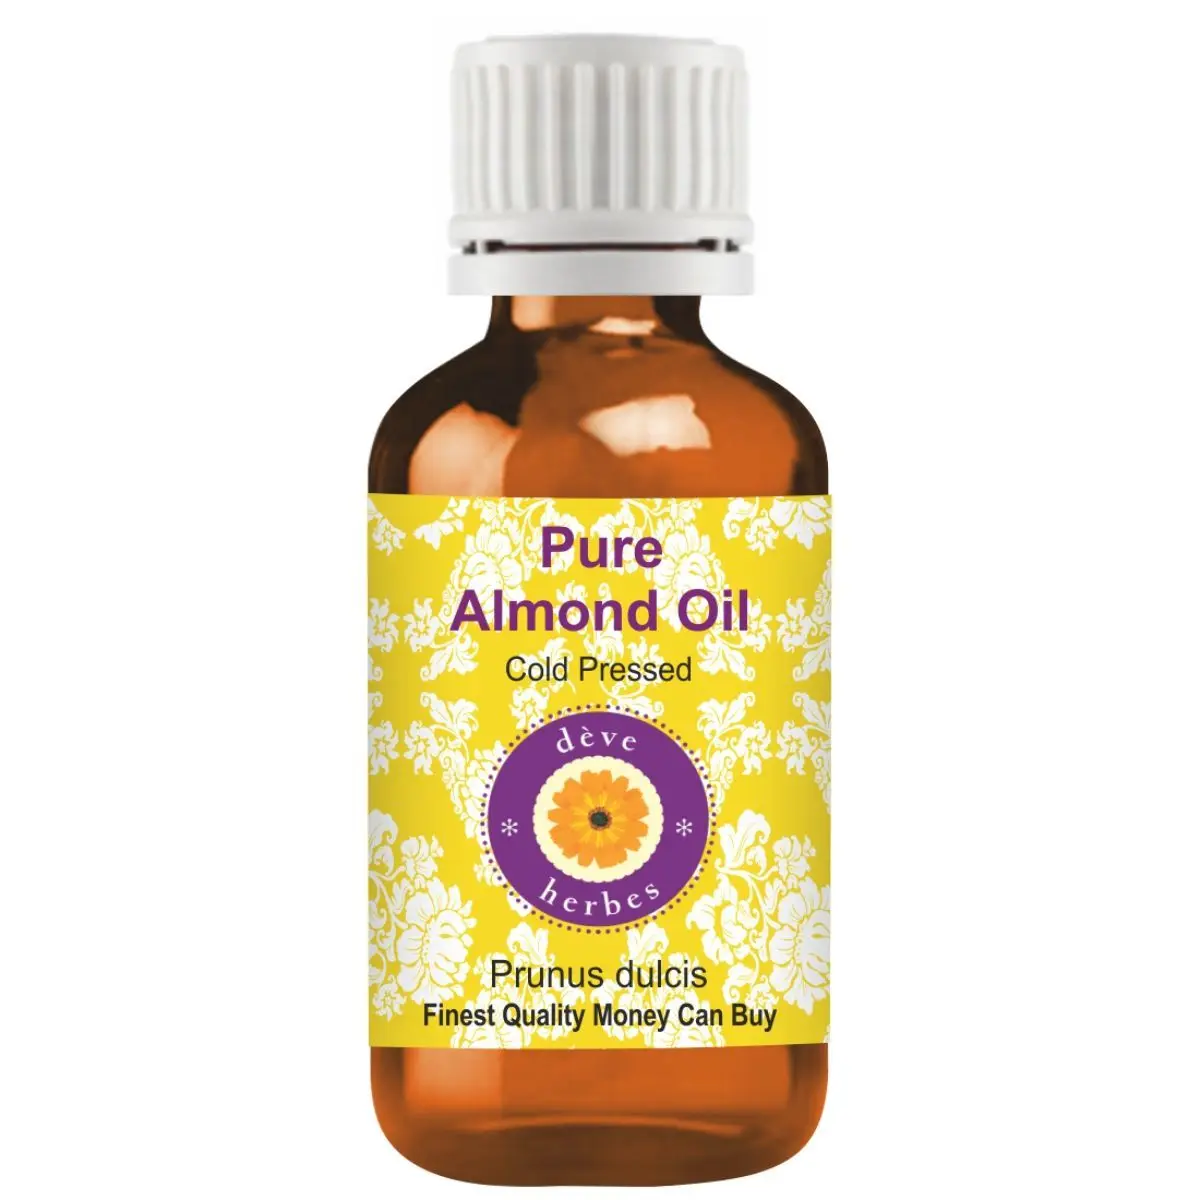 Deve Herbes Pure Almond Oil (Prunus dulcis) Natural Therapeutic Grade Cold Pressed (30 ml)